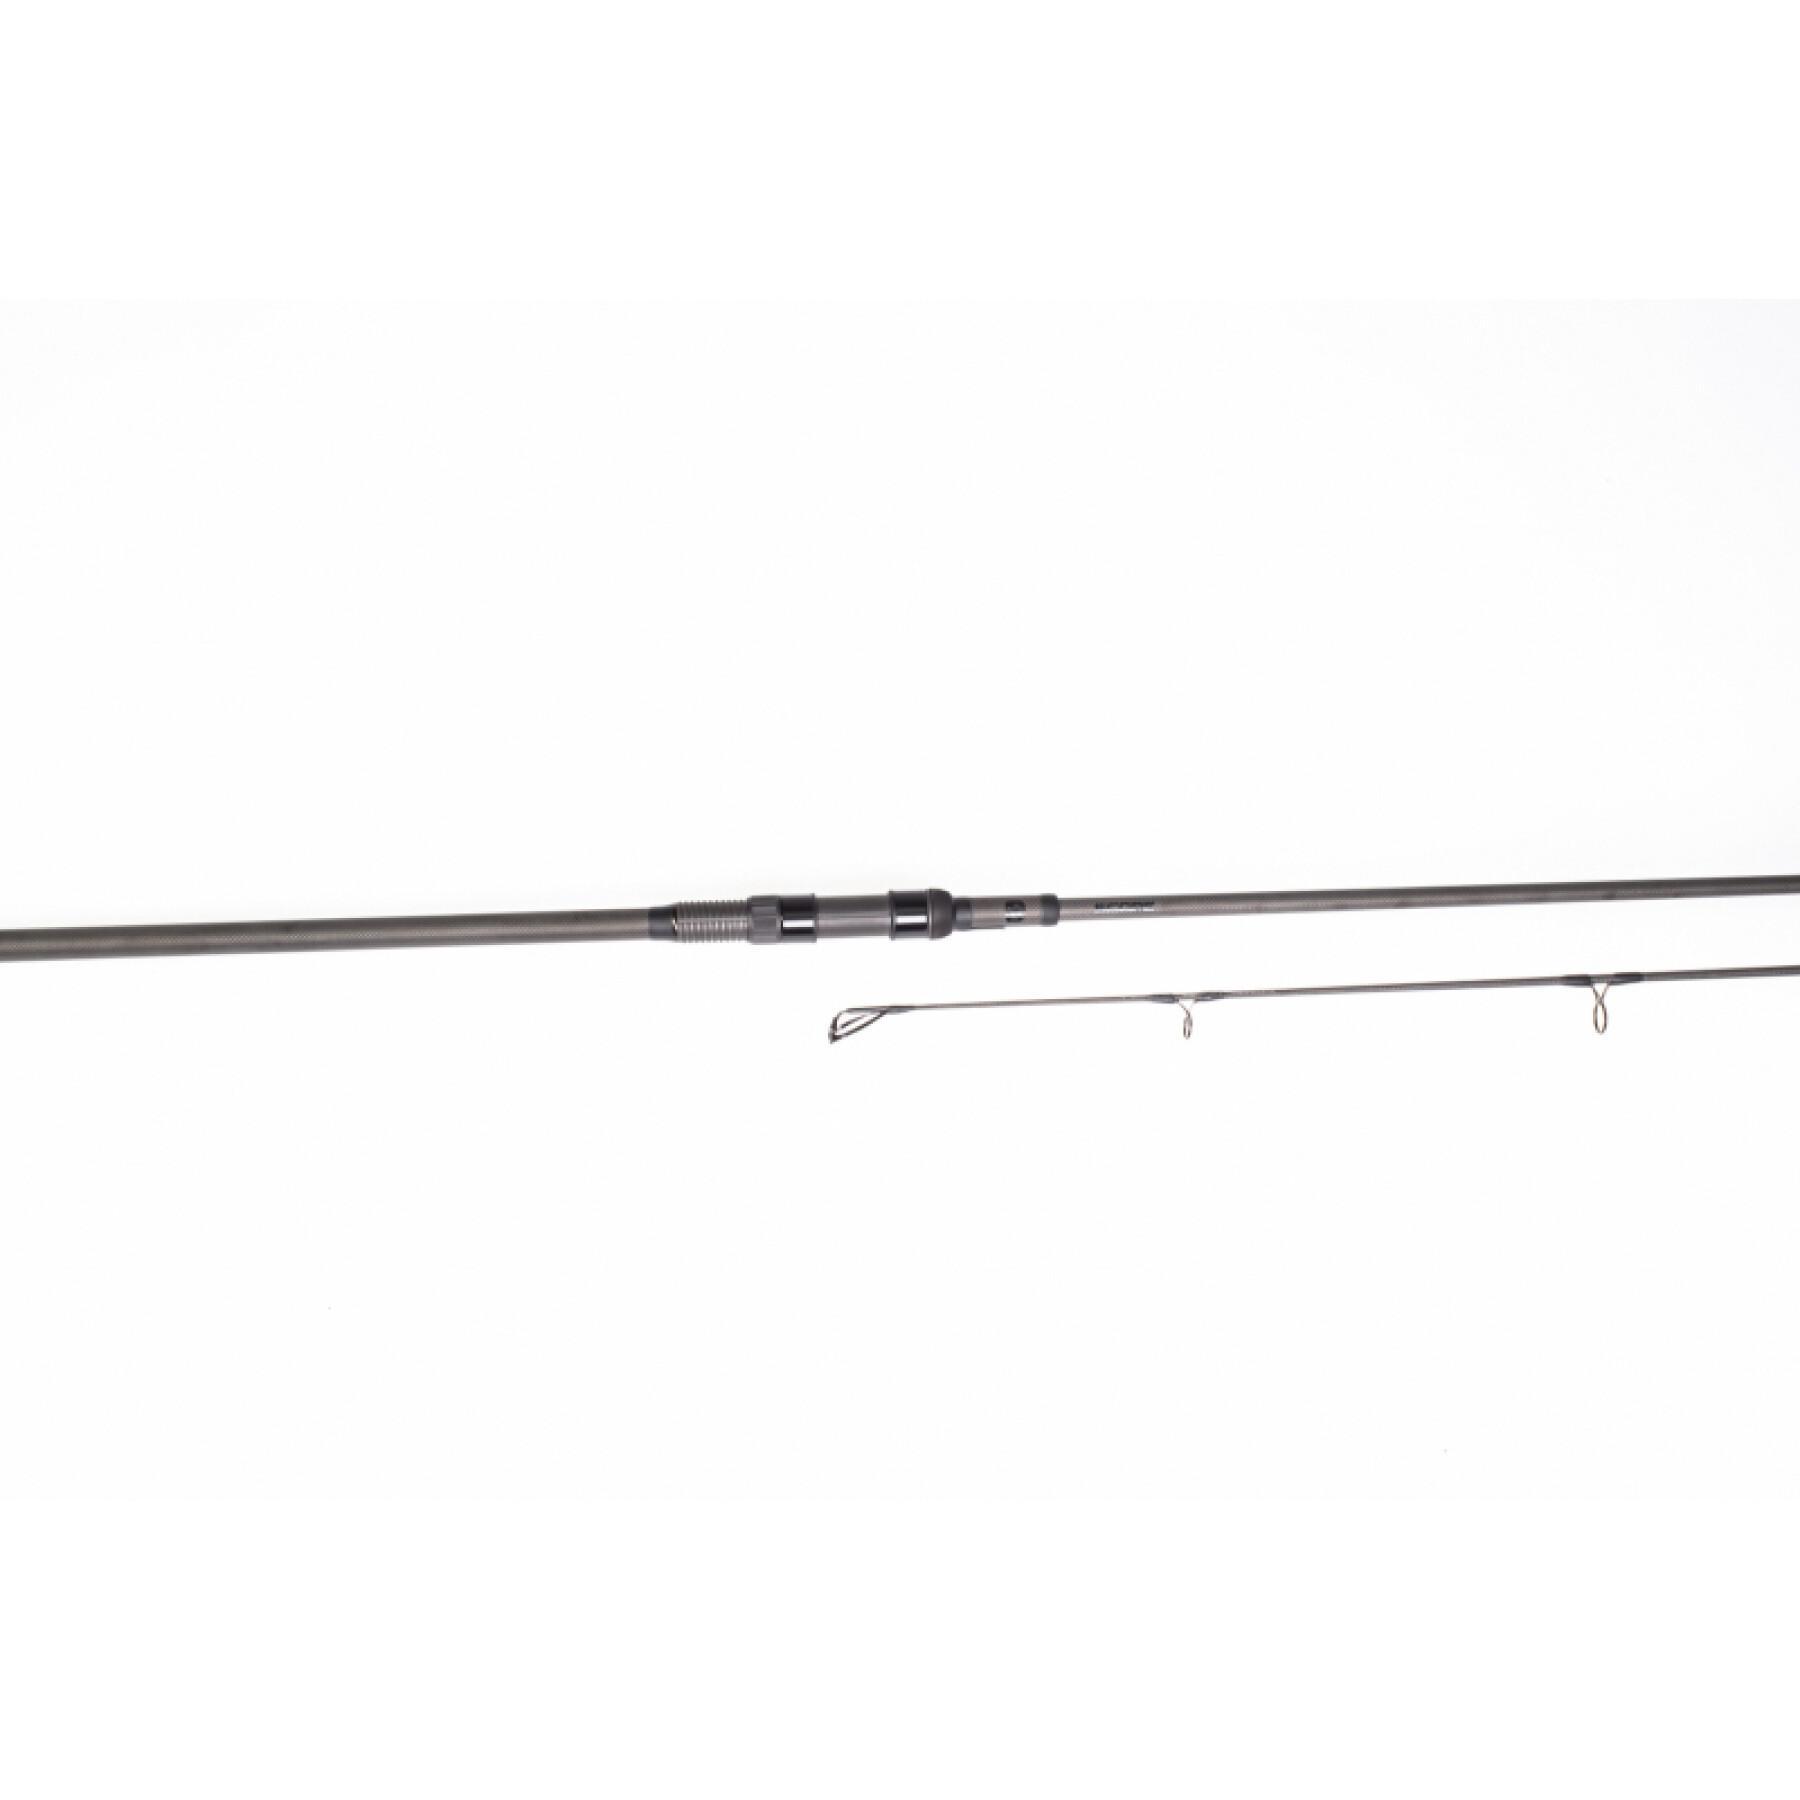 Caña de pescar Scope Rods Abbreviated 9ft 4.5lb